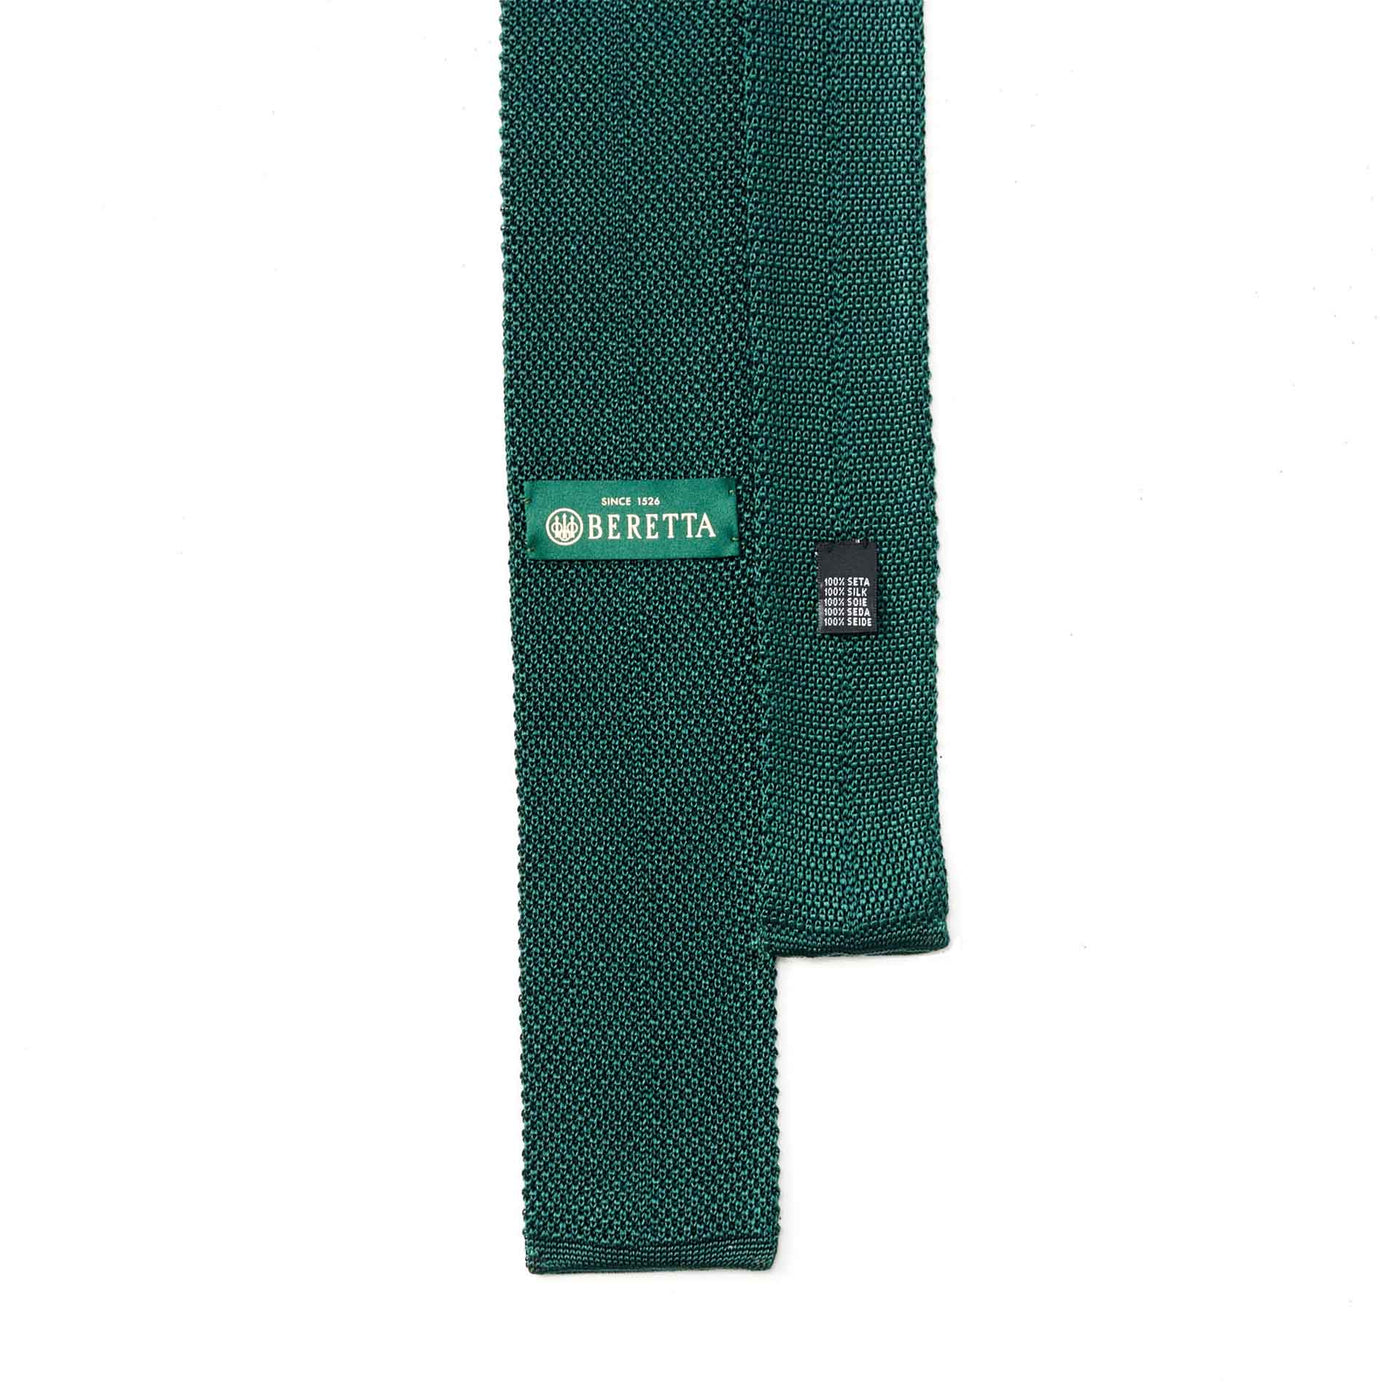 Green silk knit tie